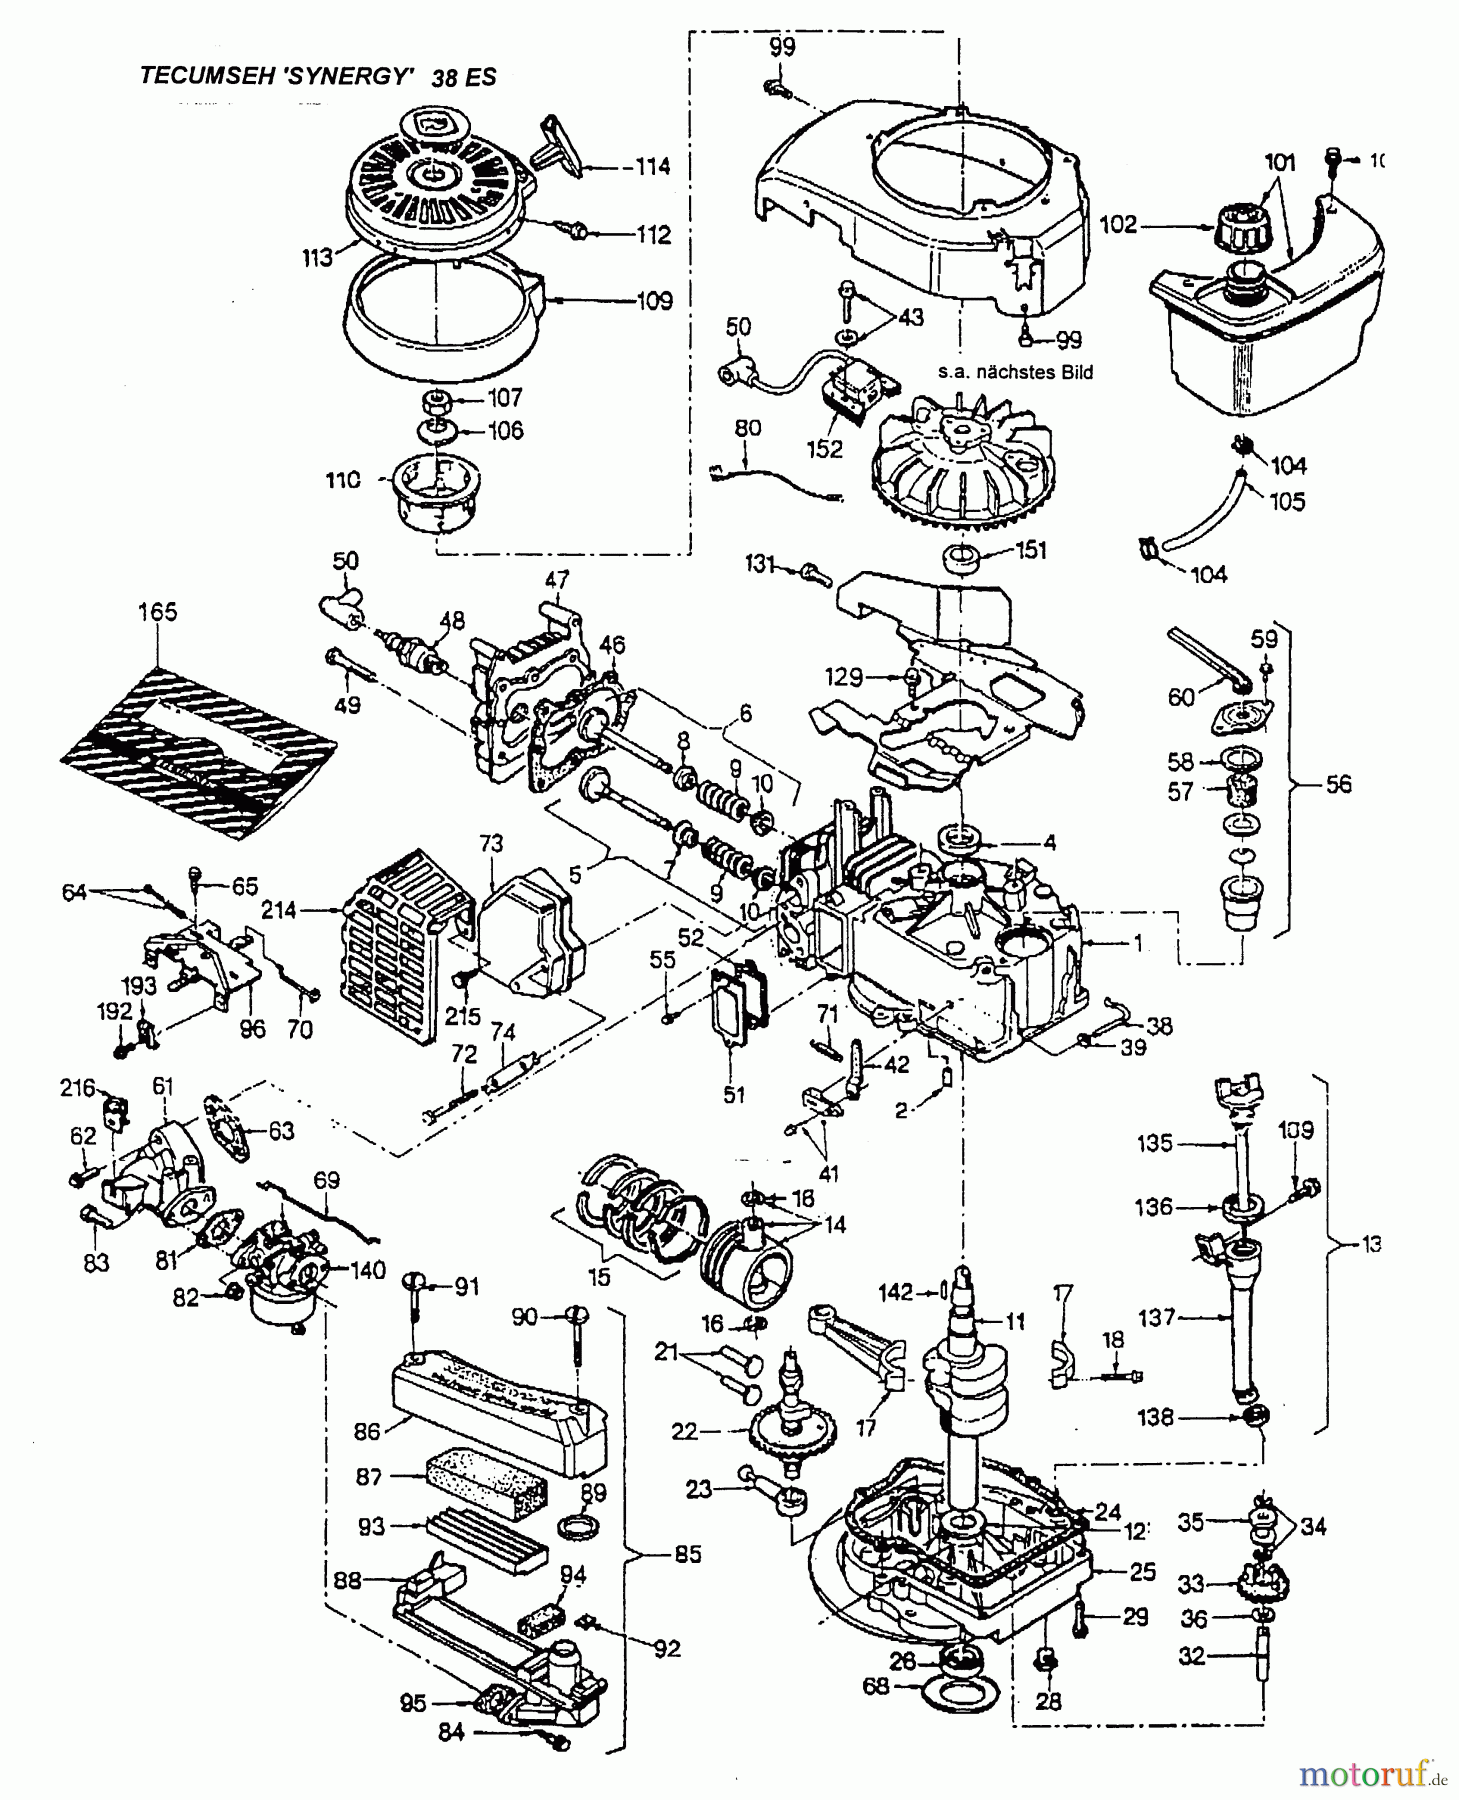  Wolf-Garten Benzinmotoren Tecumseh Synergy 38 ES 2033000  (1996) Motor